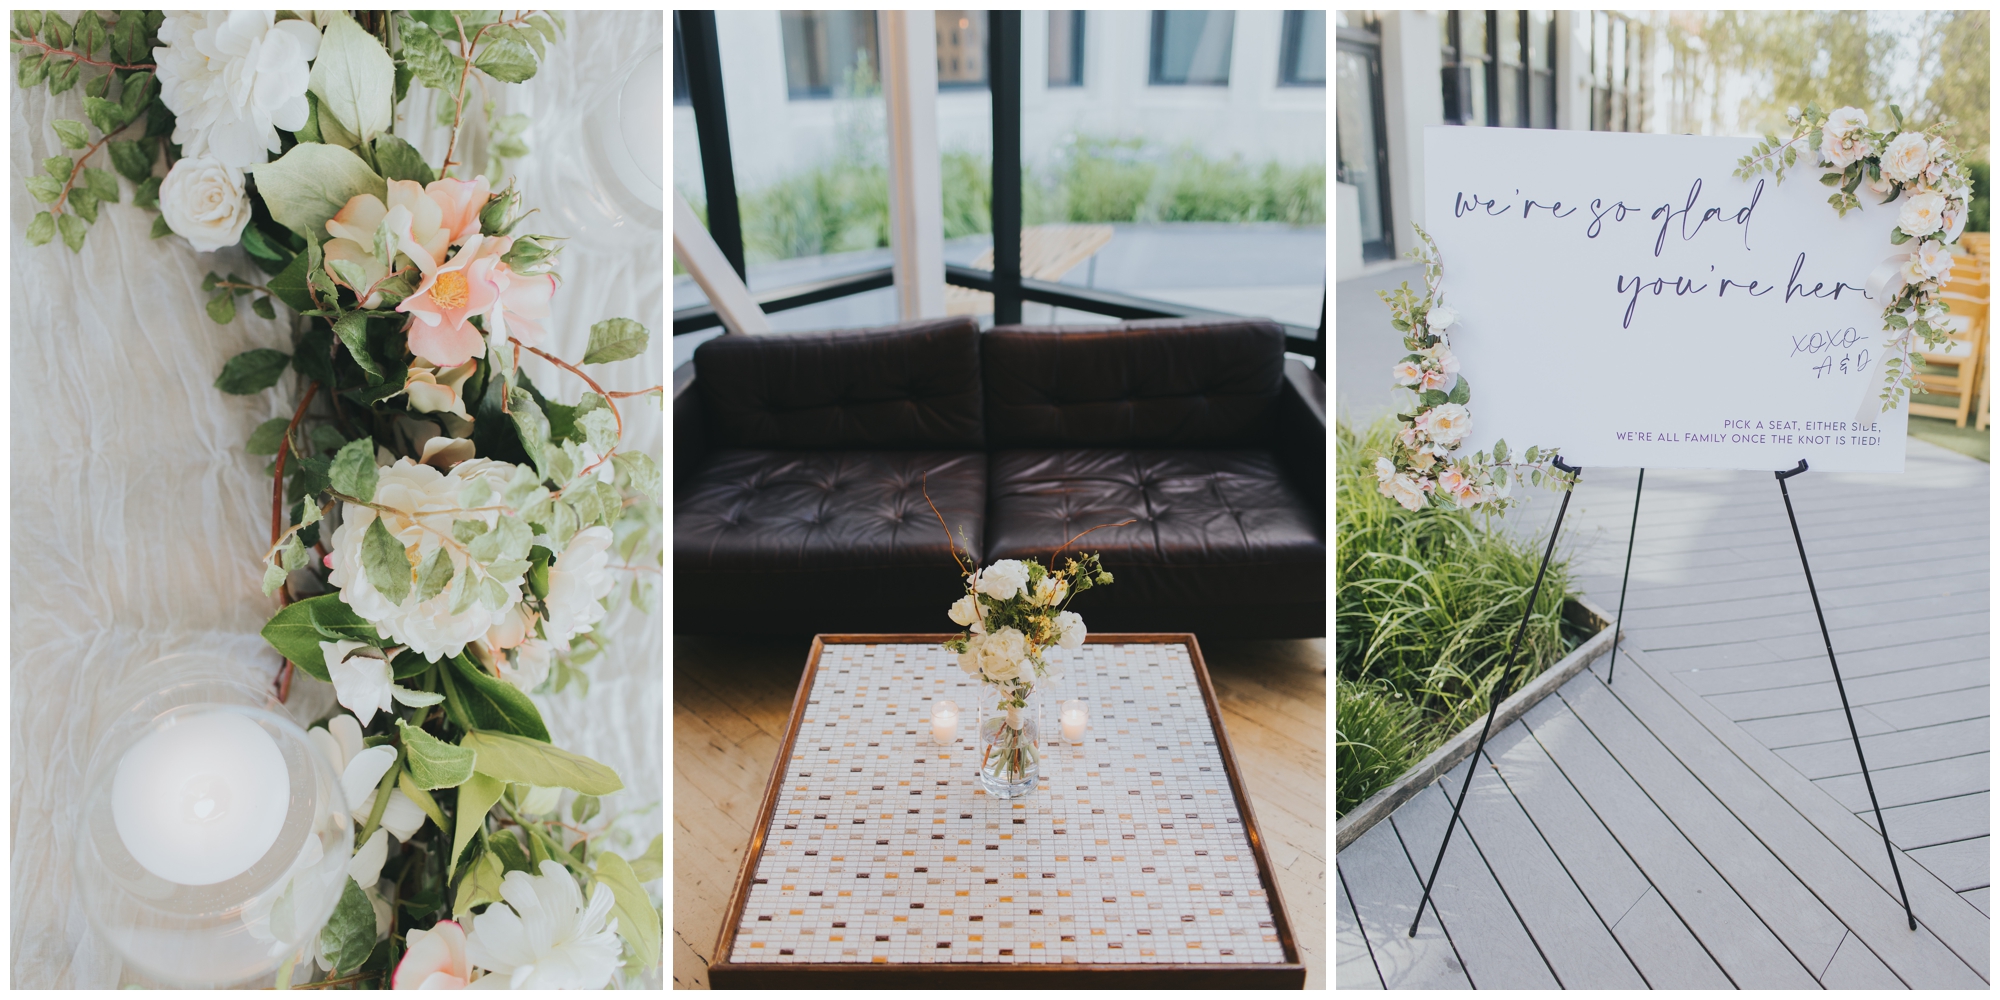 Greenhouse Loft Chicago wedding reception; elegant minimalist wedding design